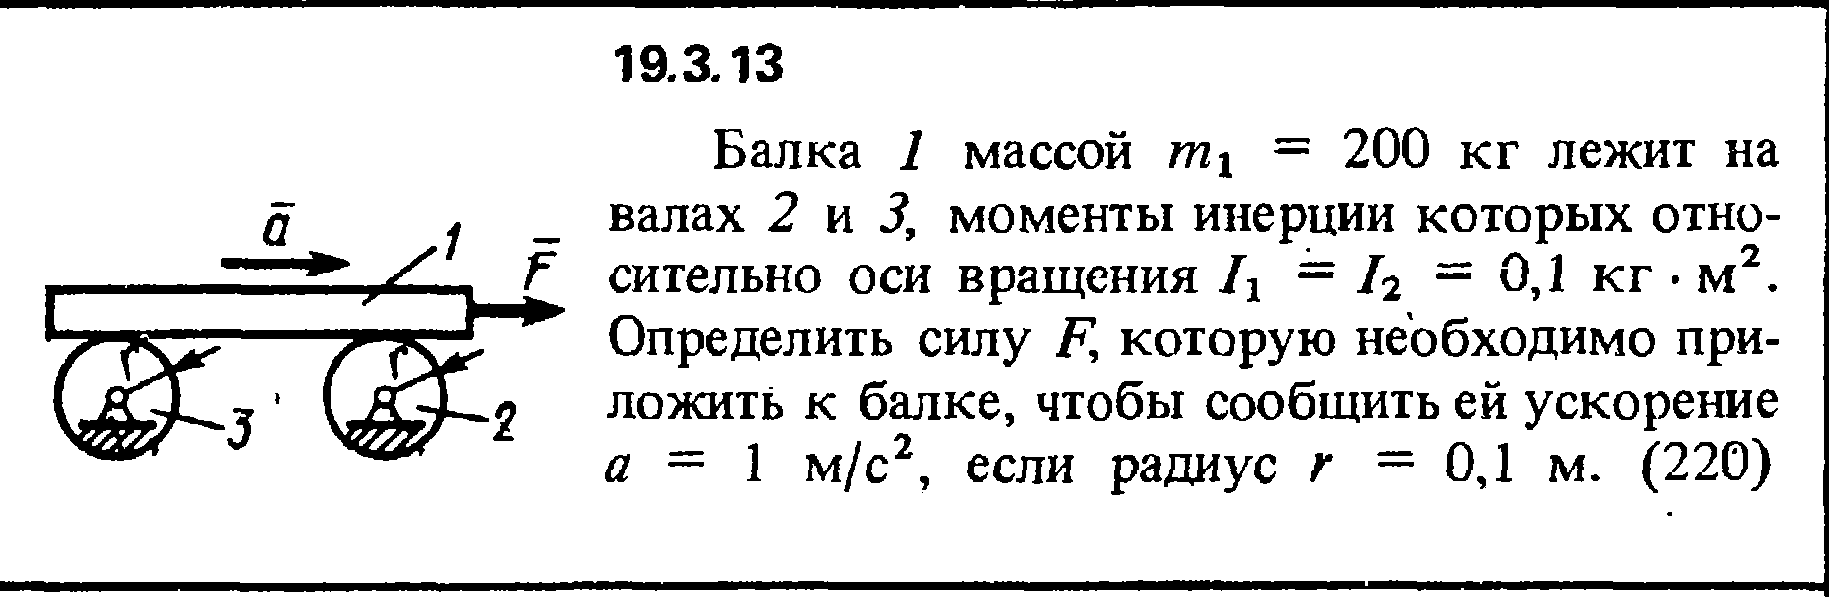 Решение 19.3.13 из сборника (решебника) Кепе О.Е. 1989